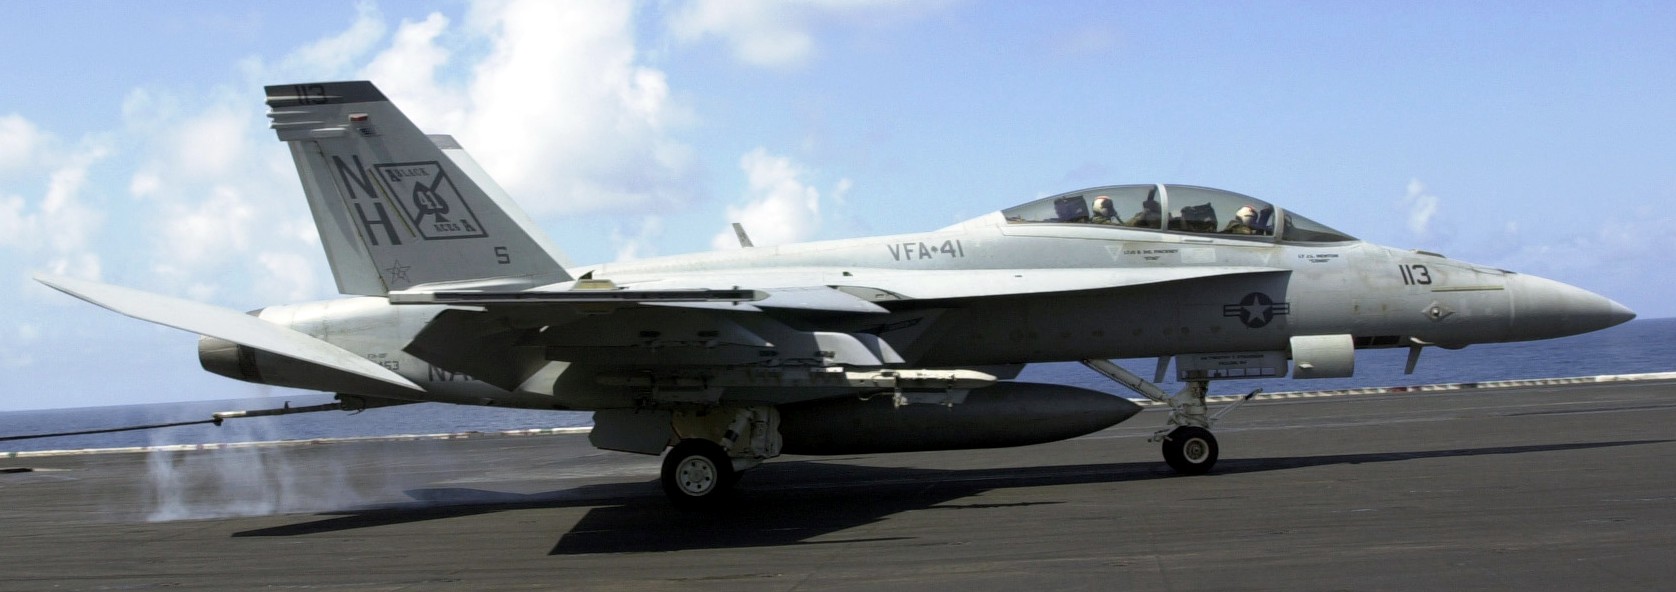 vfa-41 black aces strike fighter squadron f/a-18f super hornet cvw-11 cvn-68 uss nimitz us navy 170p